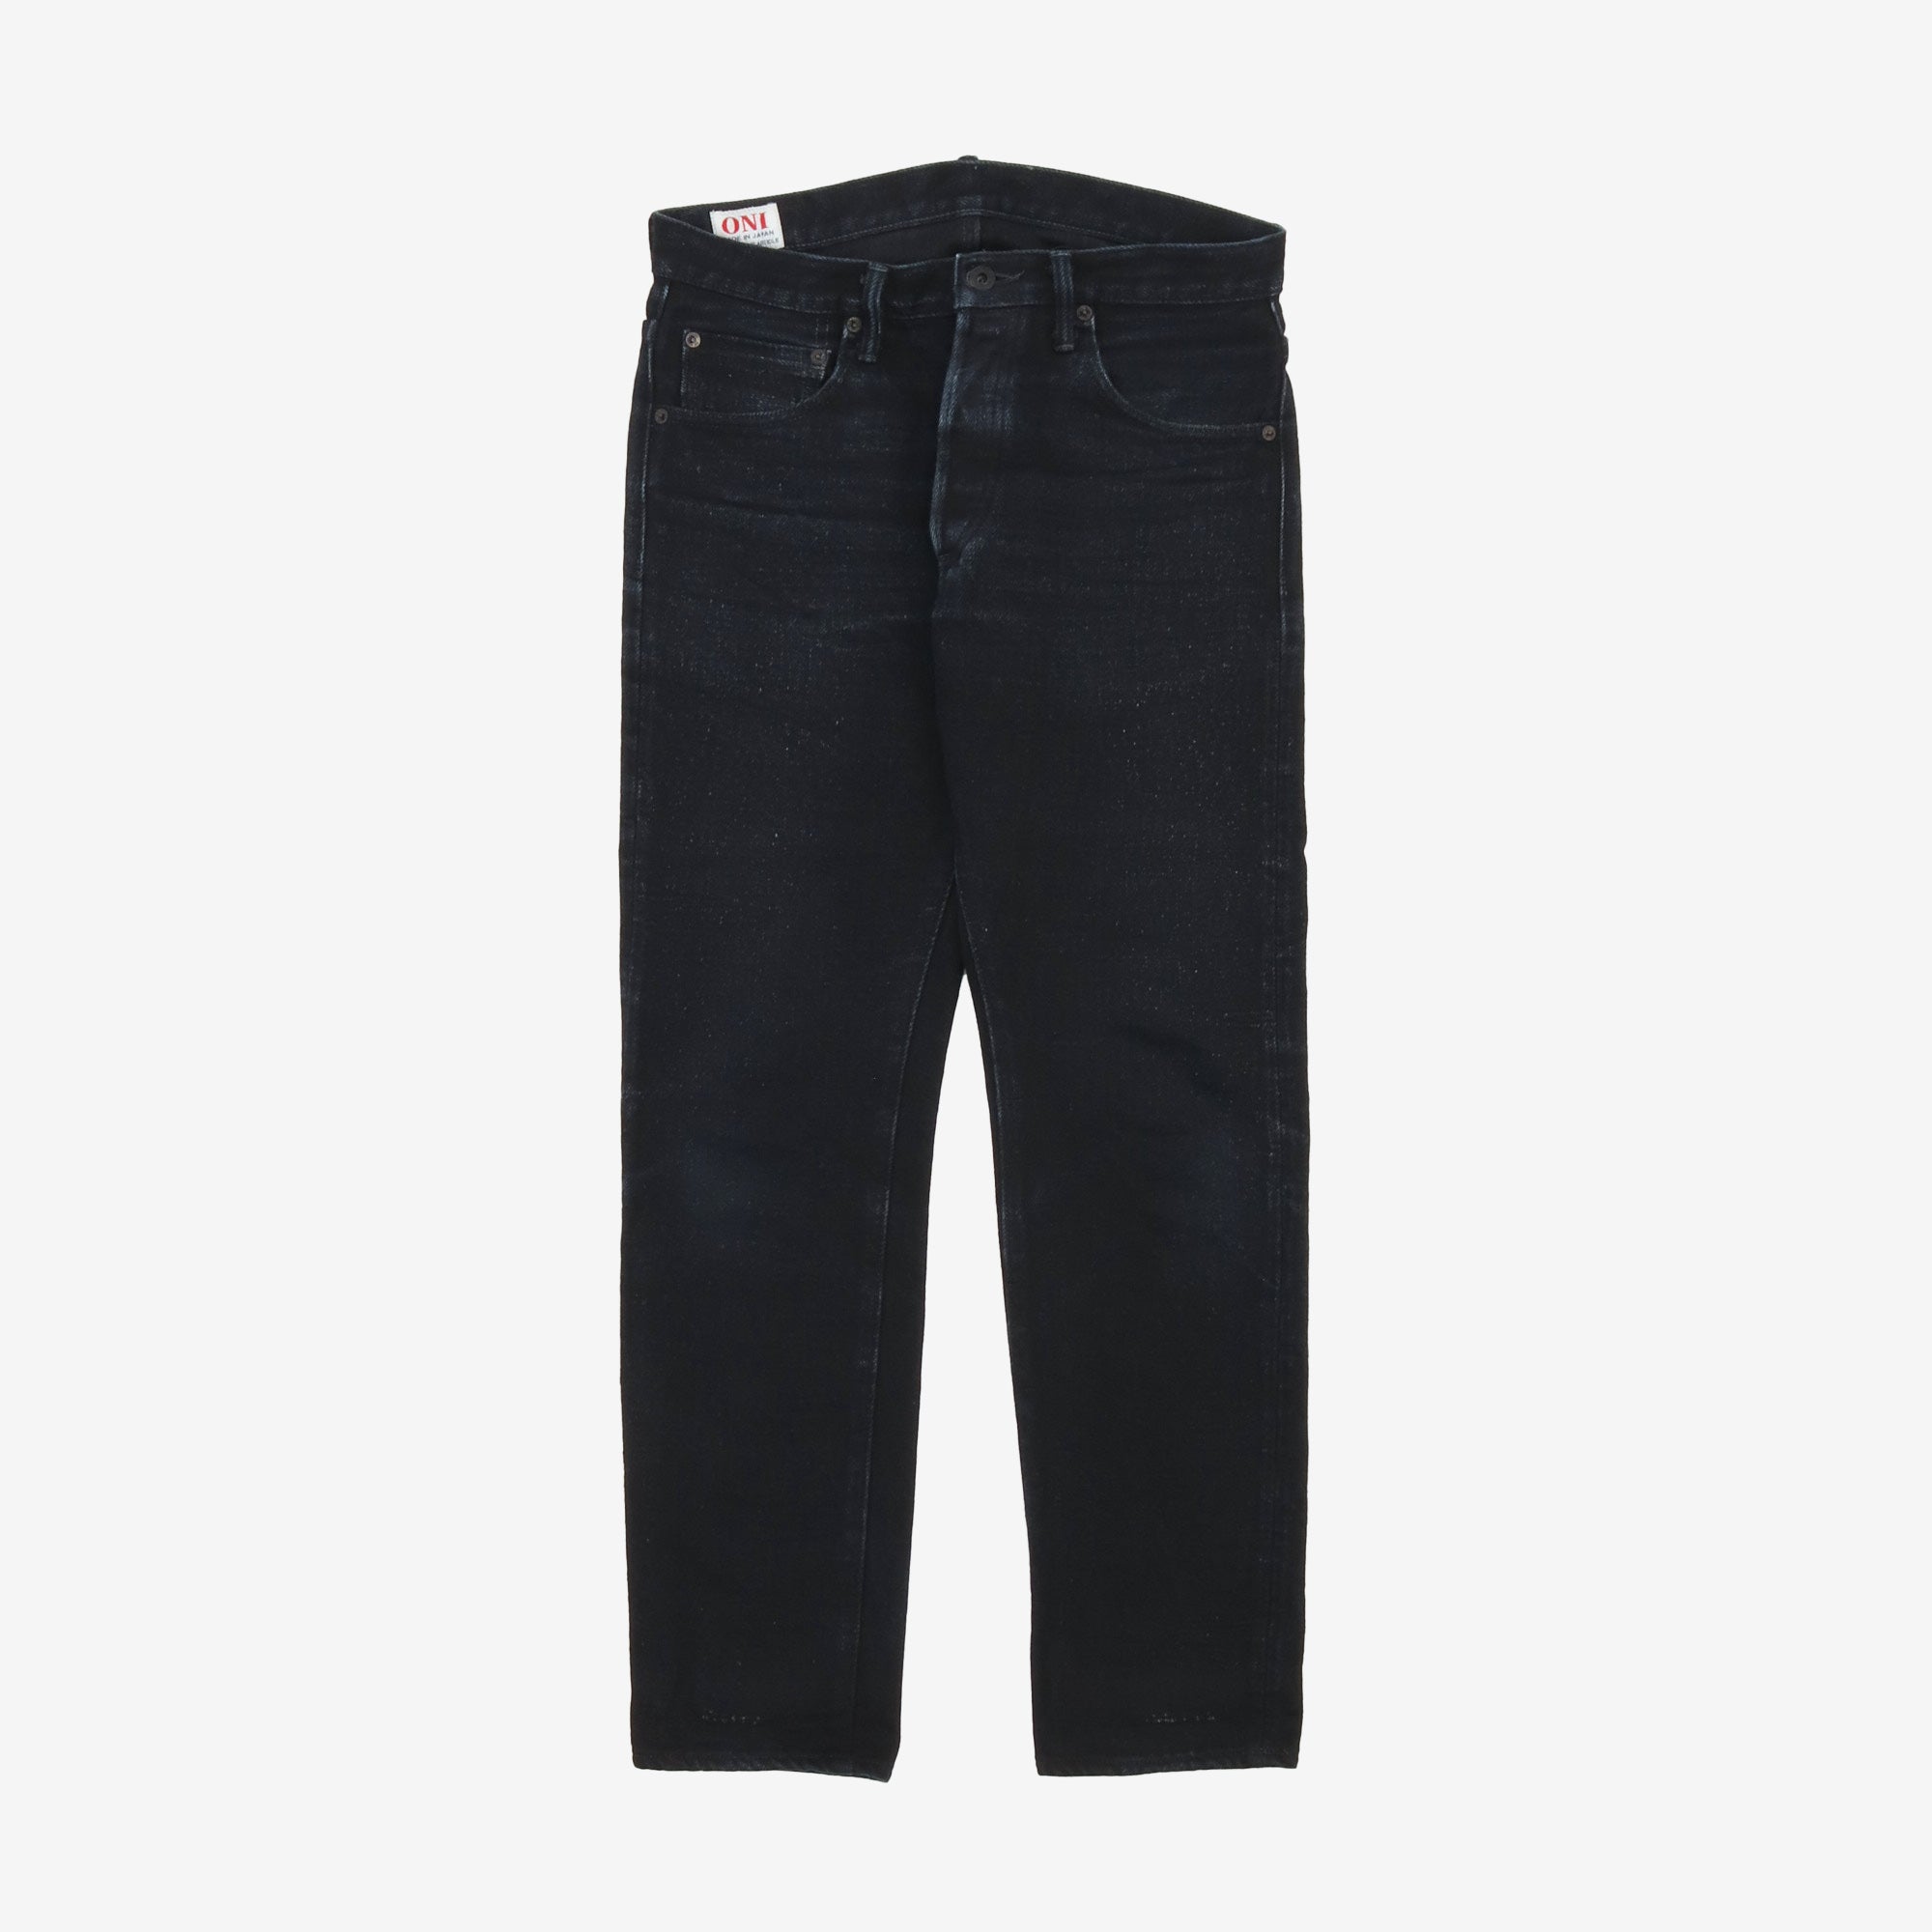 902ZR Aizumi Black Selvedge Jeans